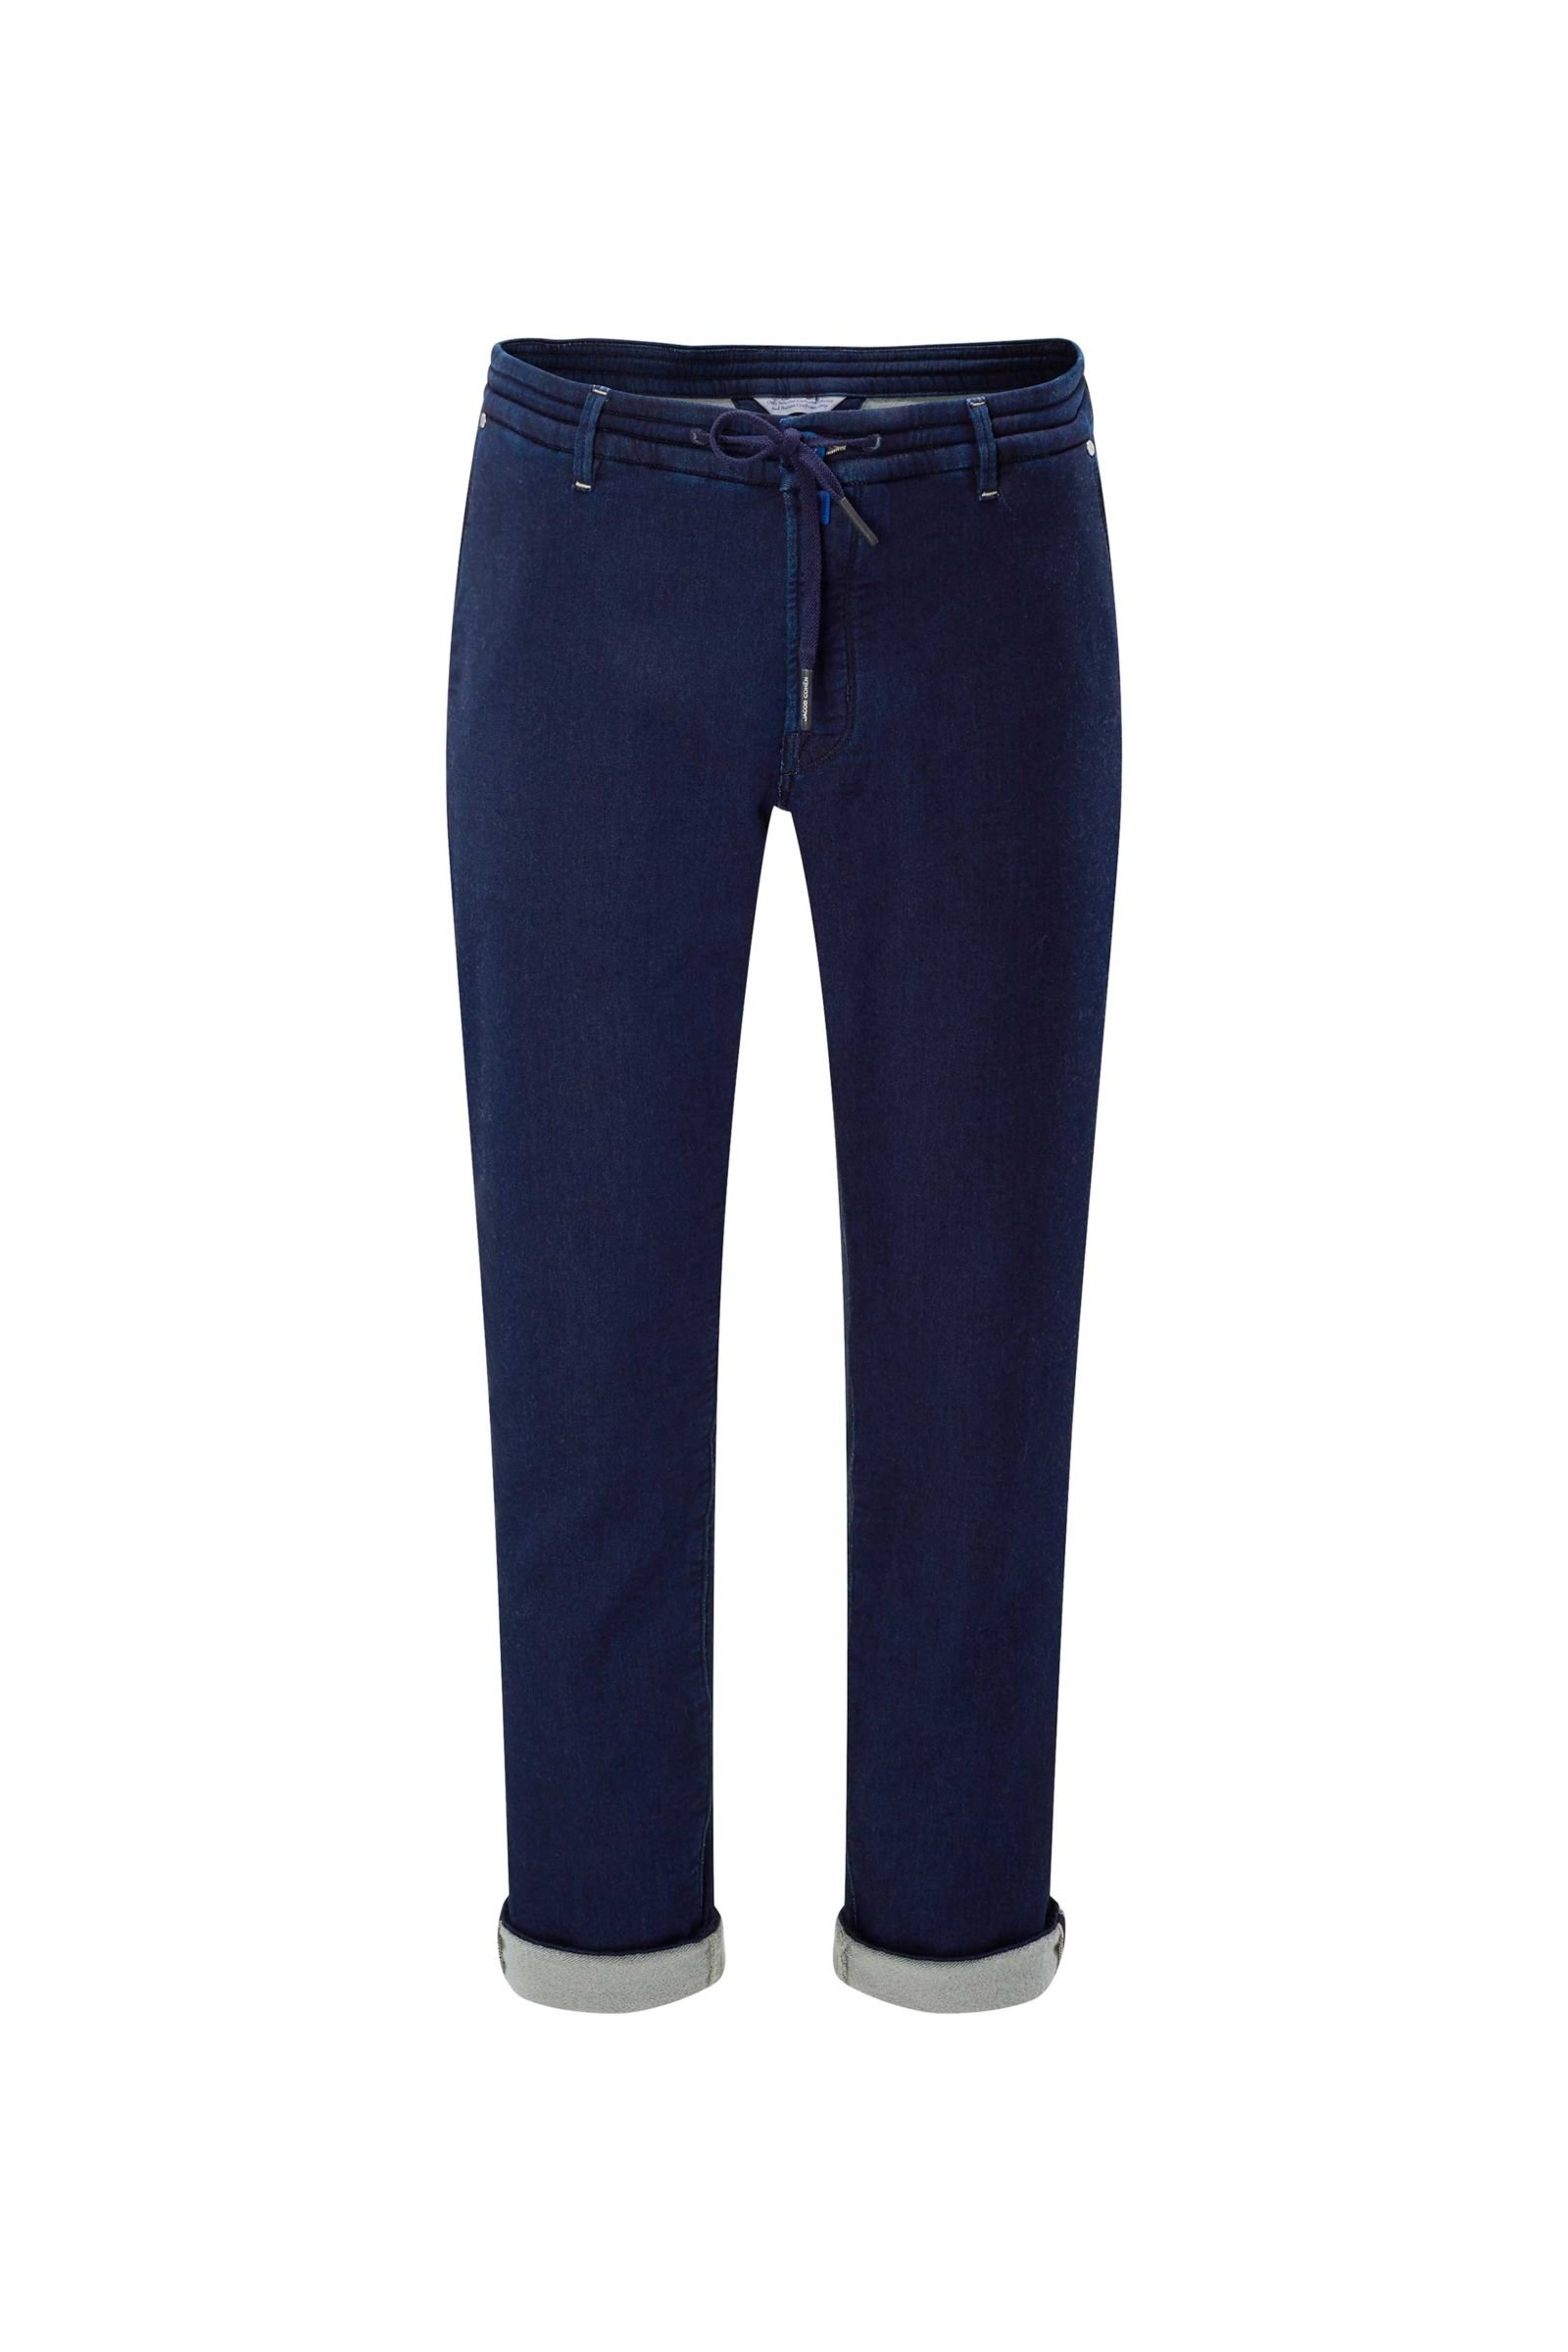 Jeans-Joggpants 'J676 Relax Comfort Slim Fit' navy